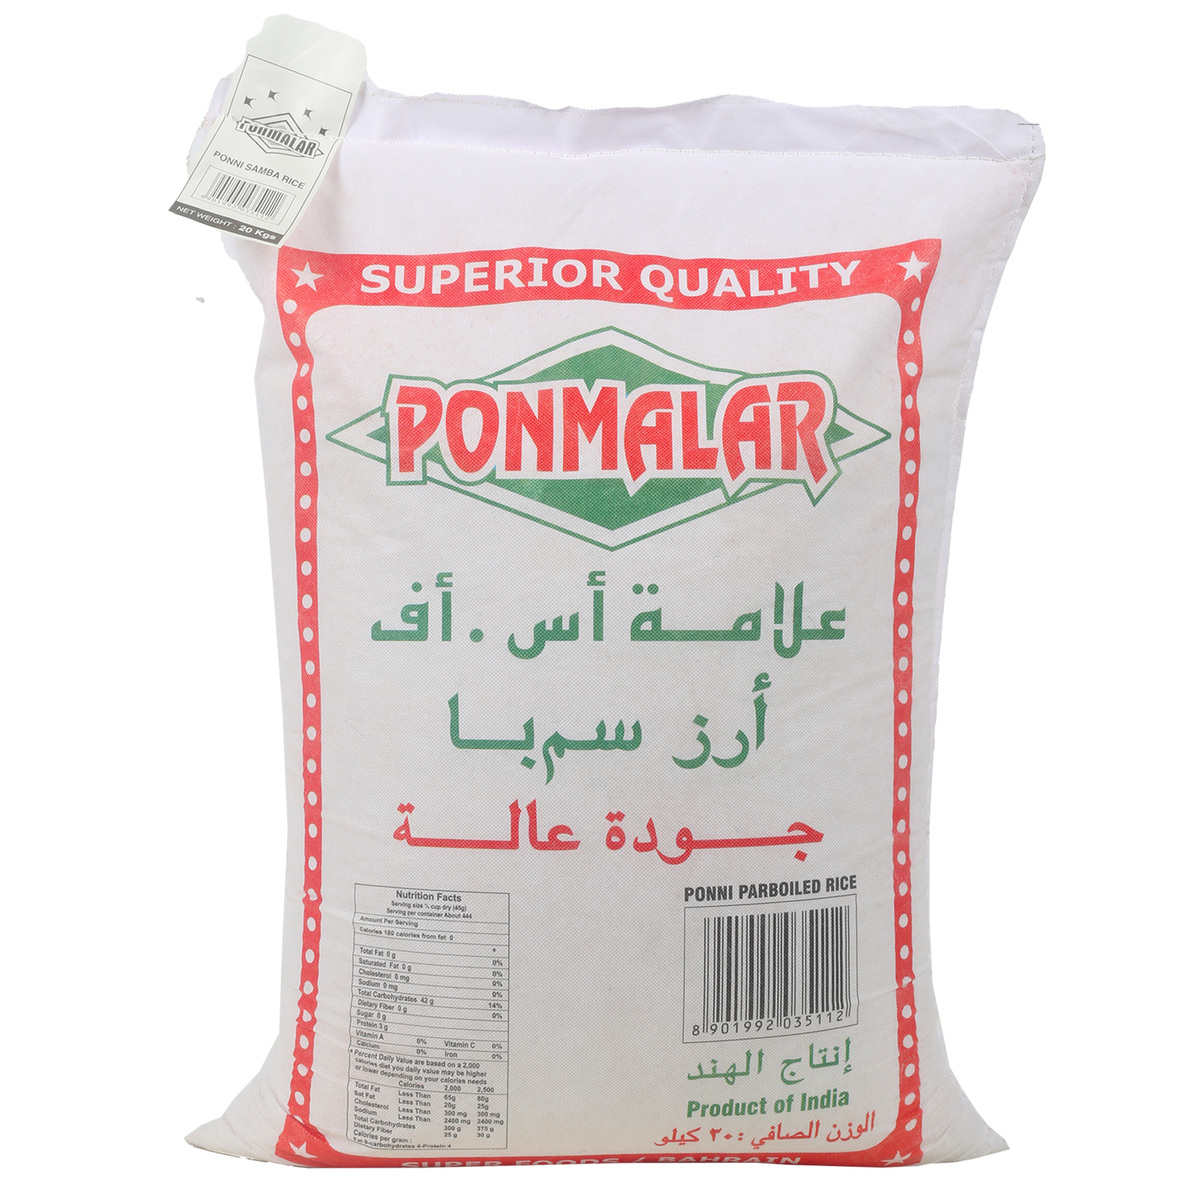 Ponmalar Ponni Rice 20 kg